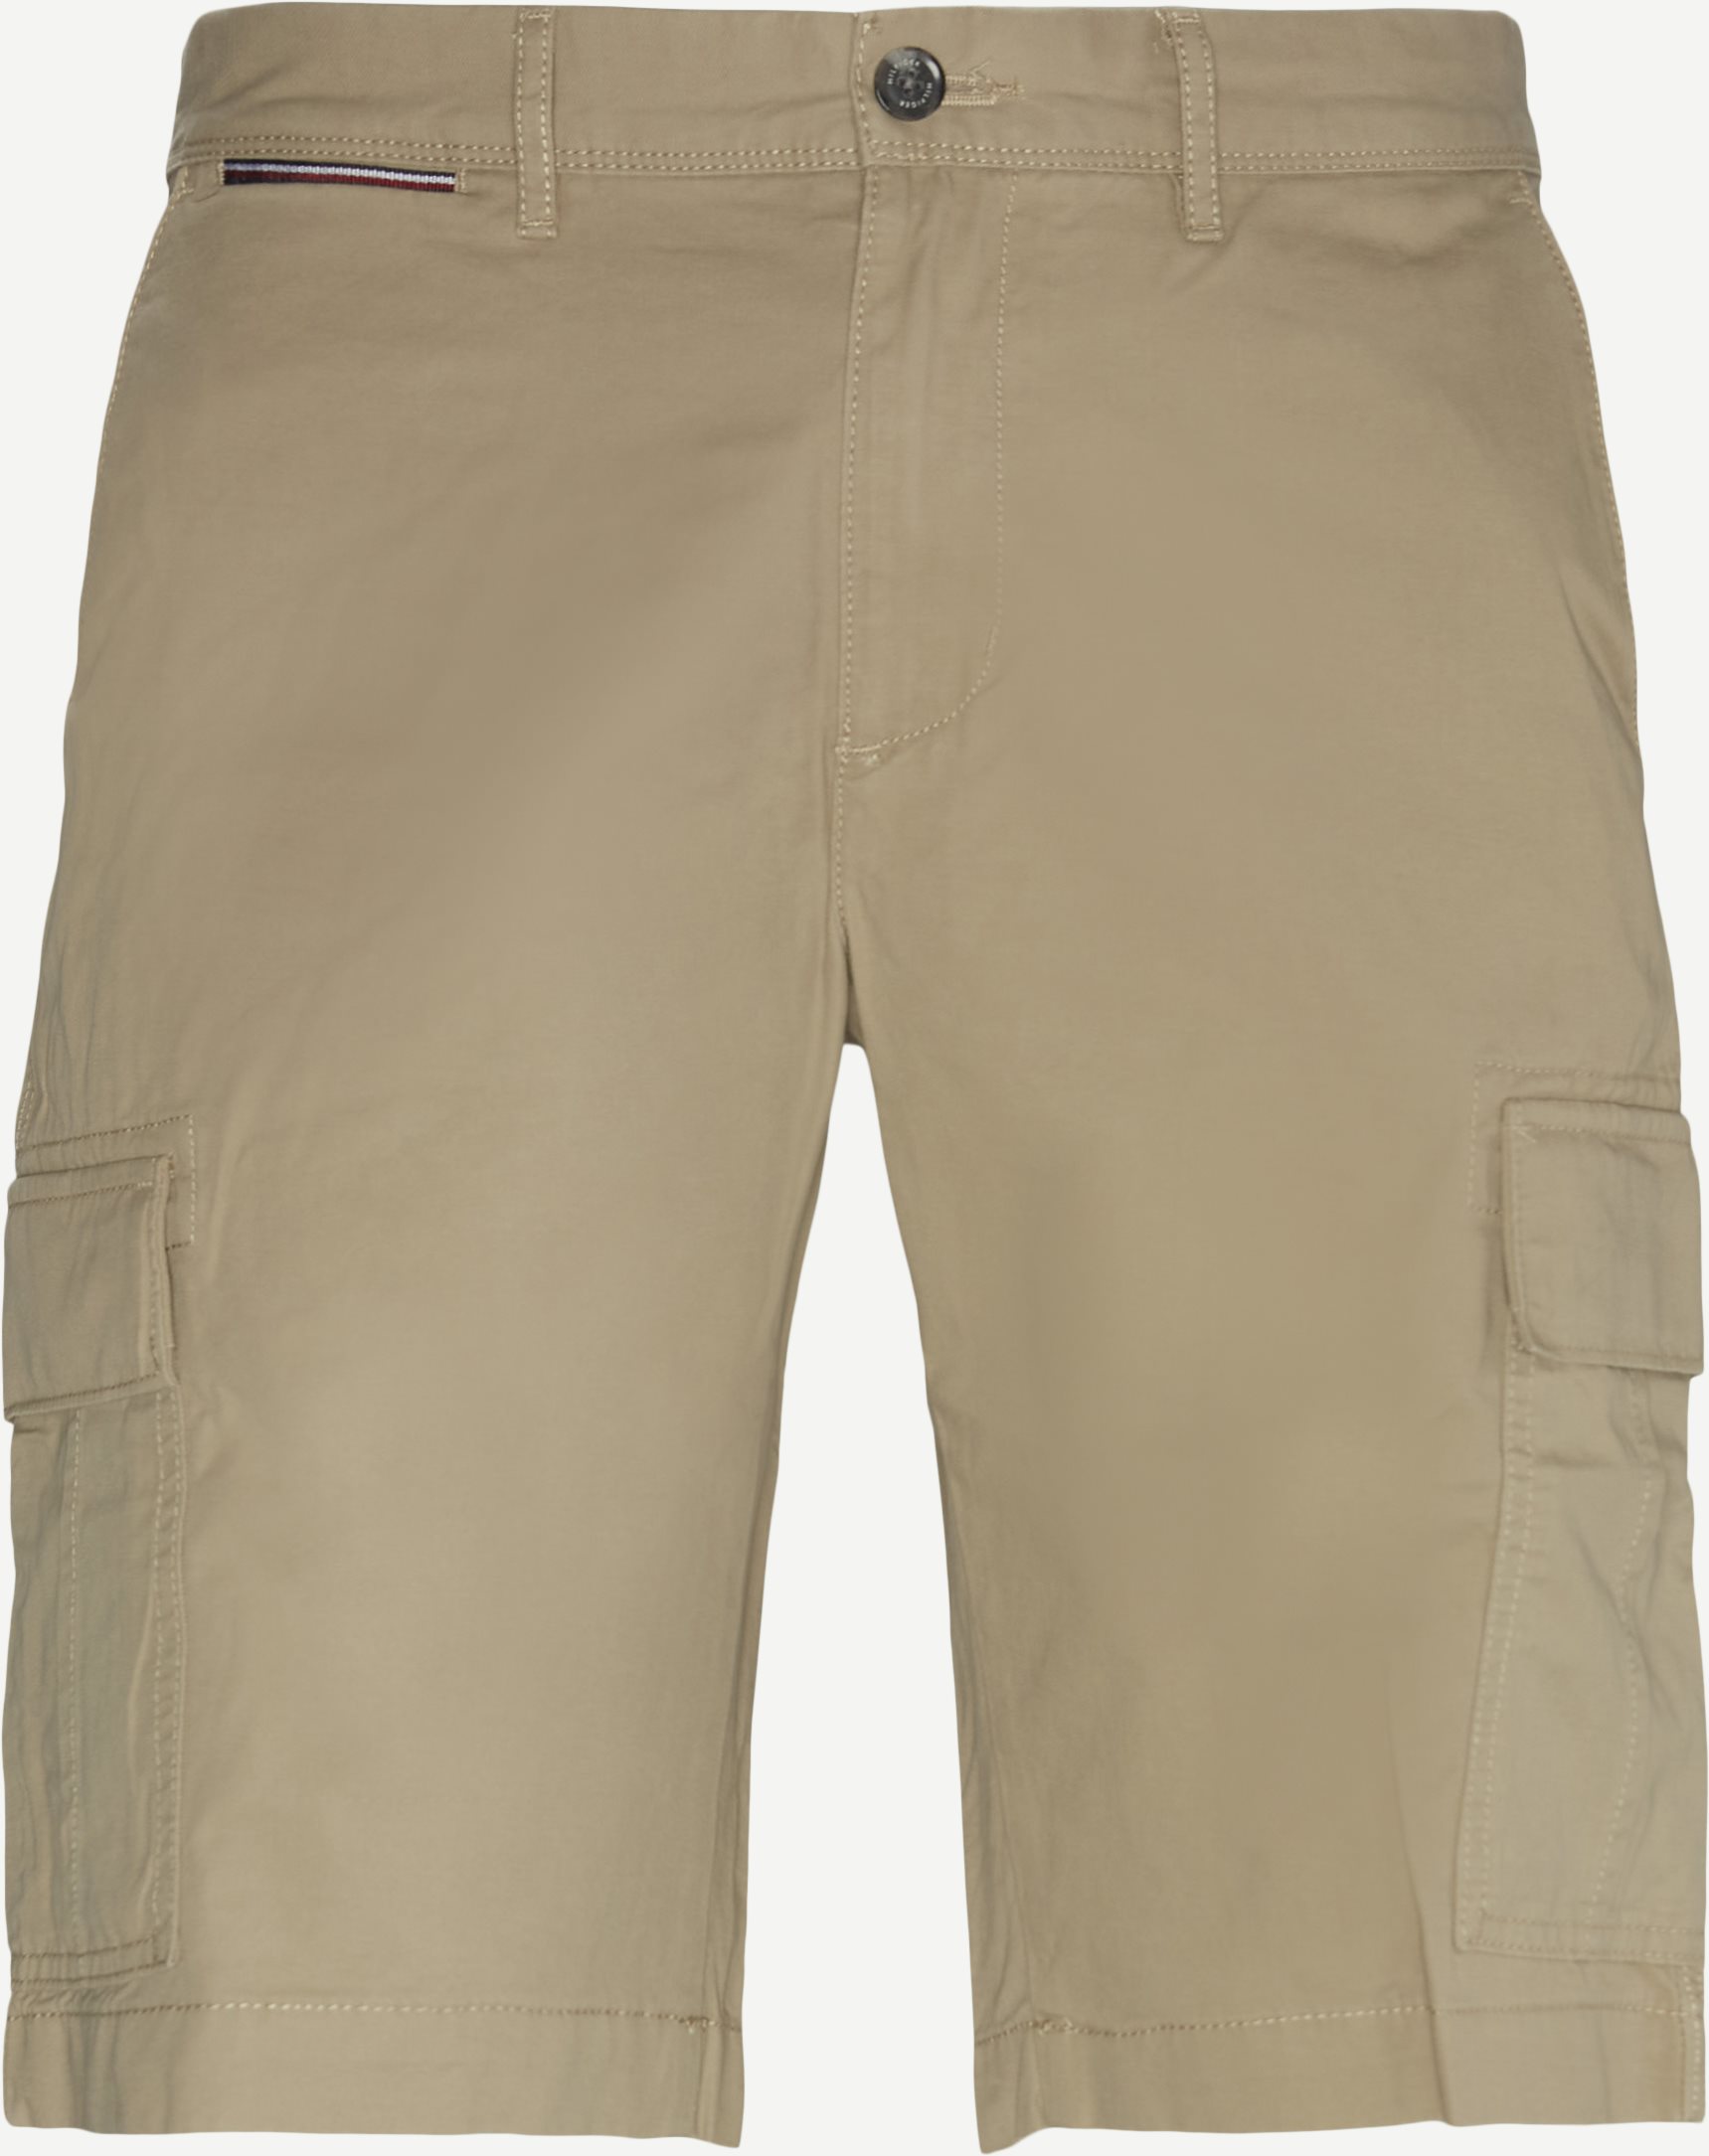 John Cargo Shorts - Shorts - Regular fit - Sand